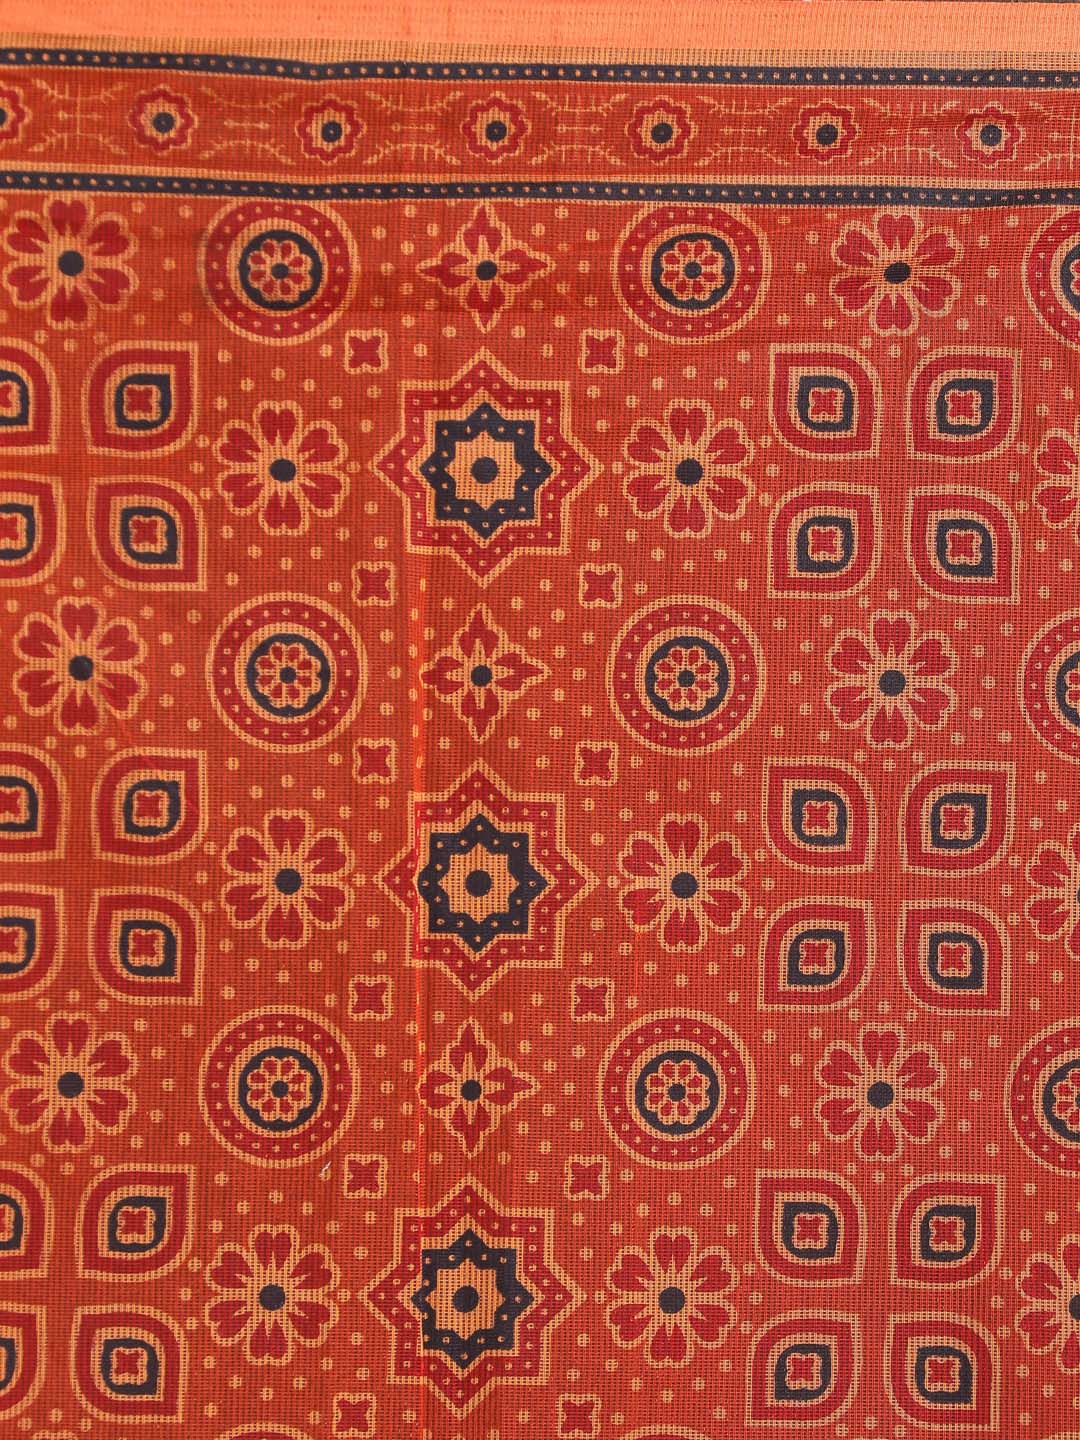 Indethnic Printed Super Net Saree in Mustard - Saree Detail View